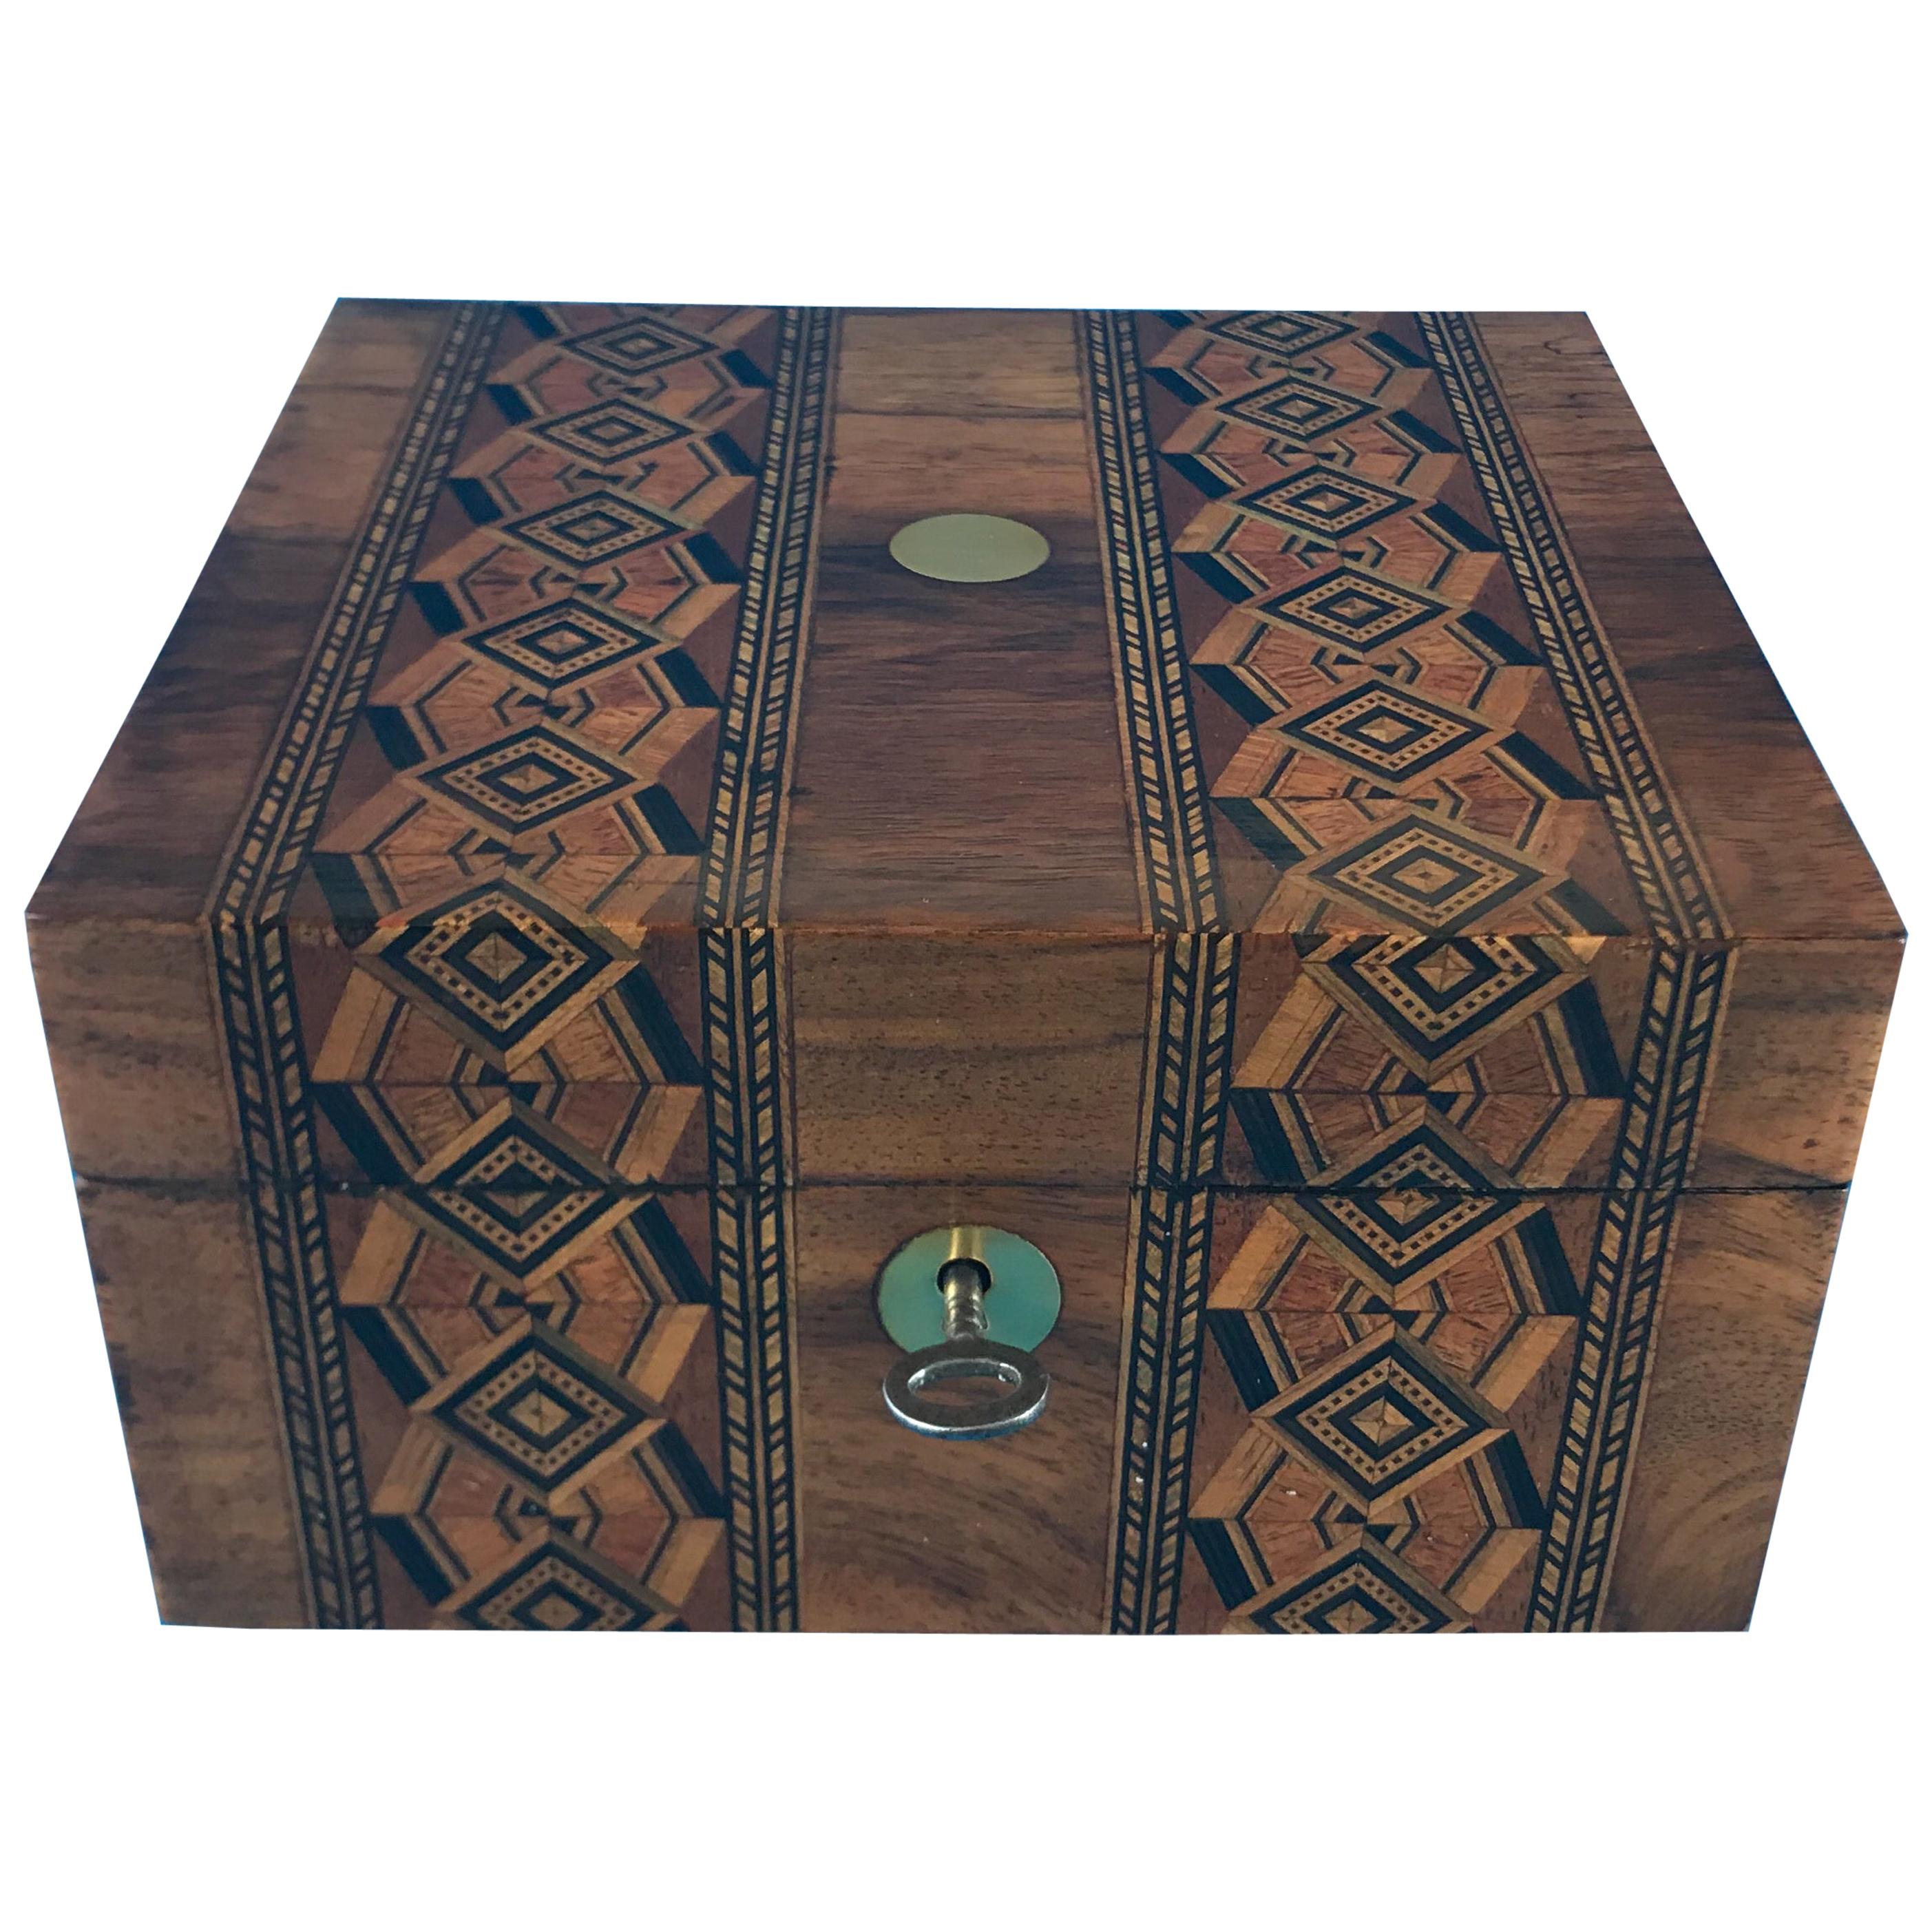 Victorian 1890-1900 Inlaid Walnut Tunbridge Ware Box